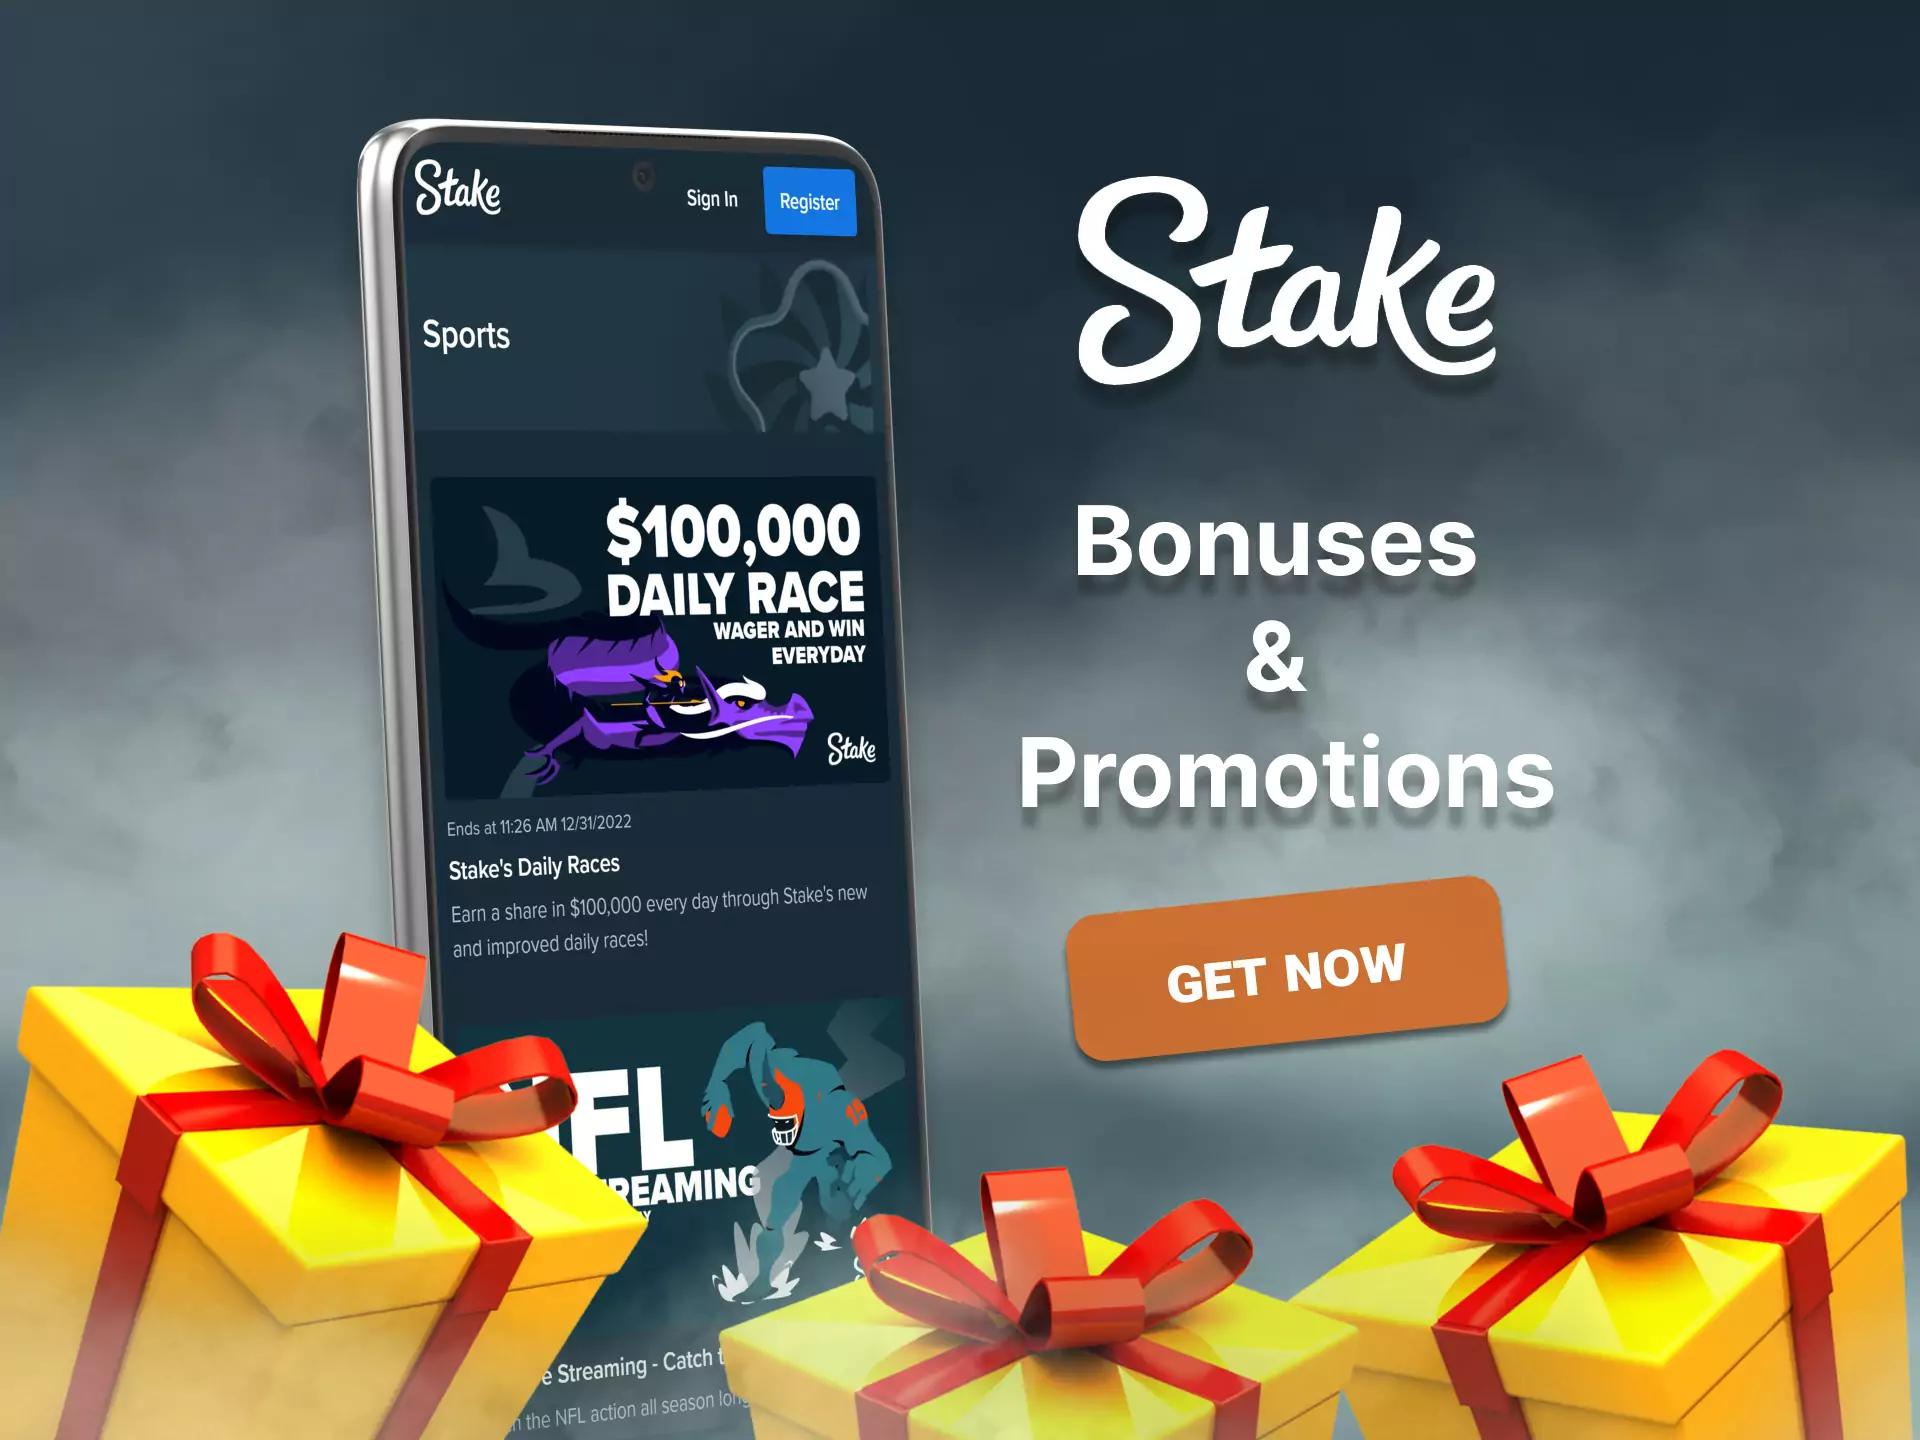 Try all the profitable bonuses for players Stake.com.